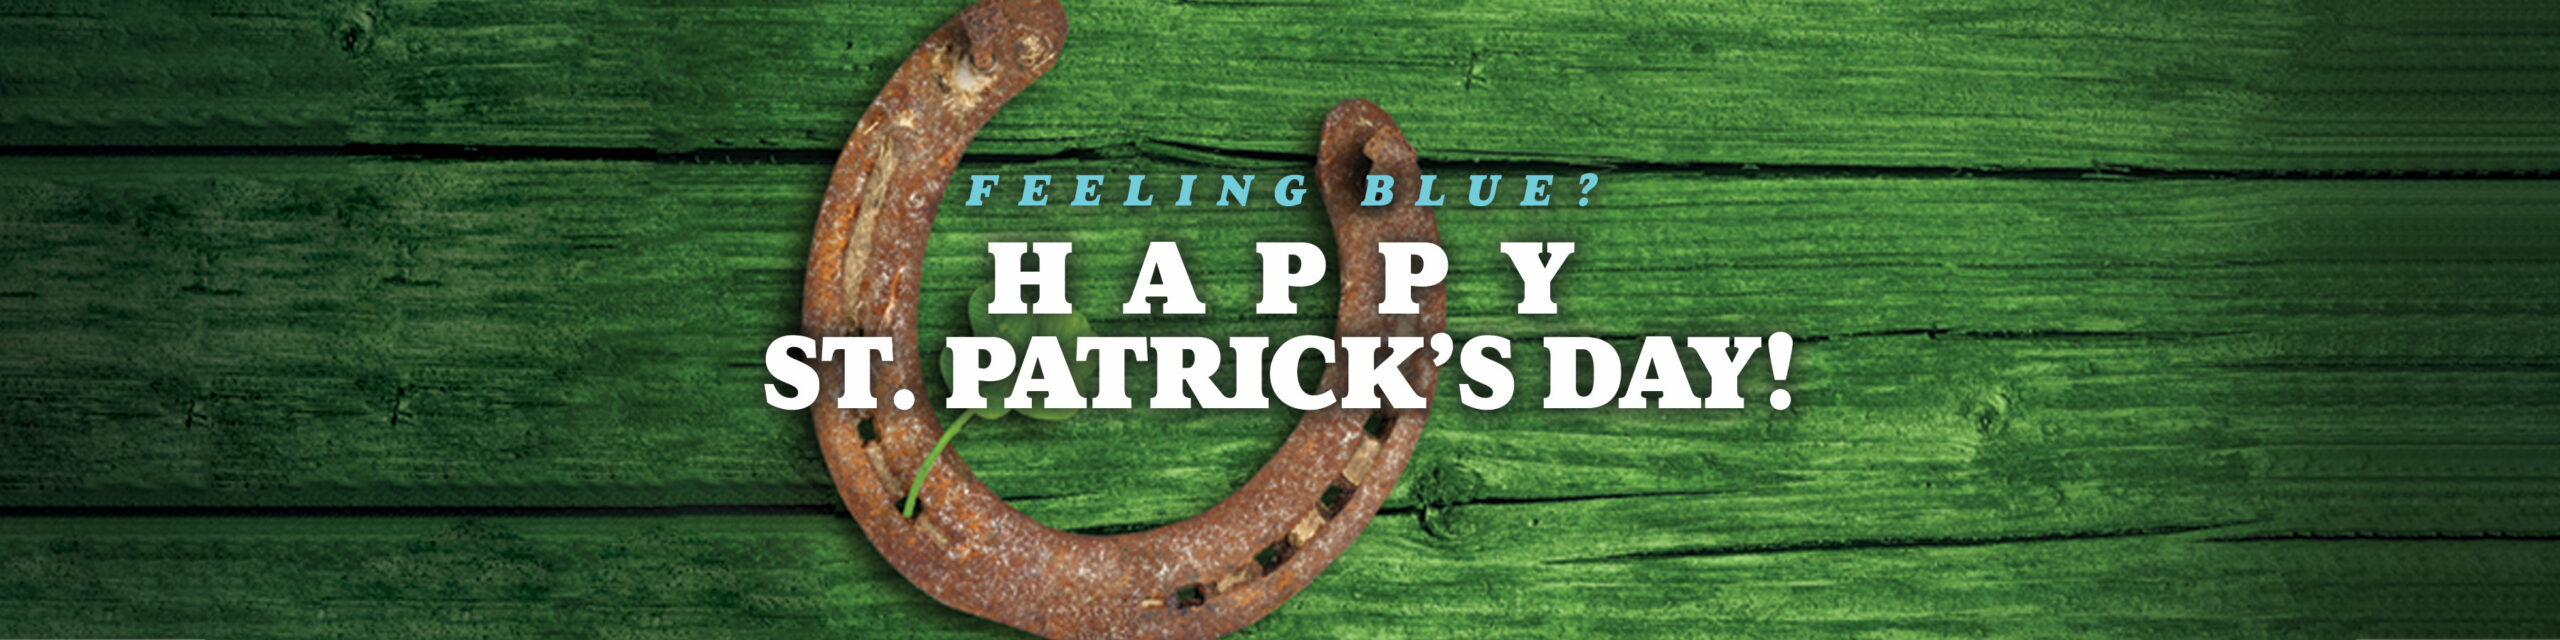 Feeling Blue? Happy St. Patrick’s Day!